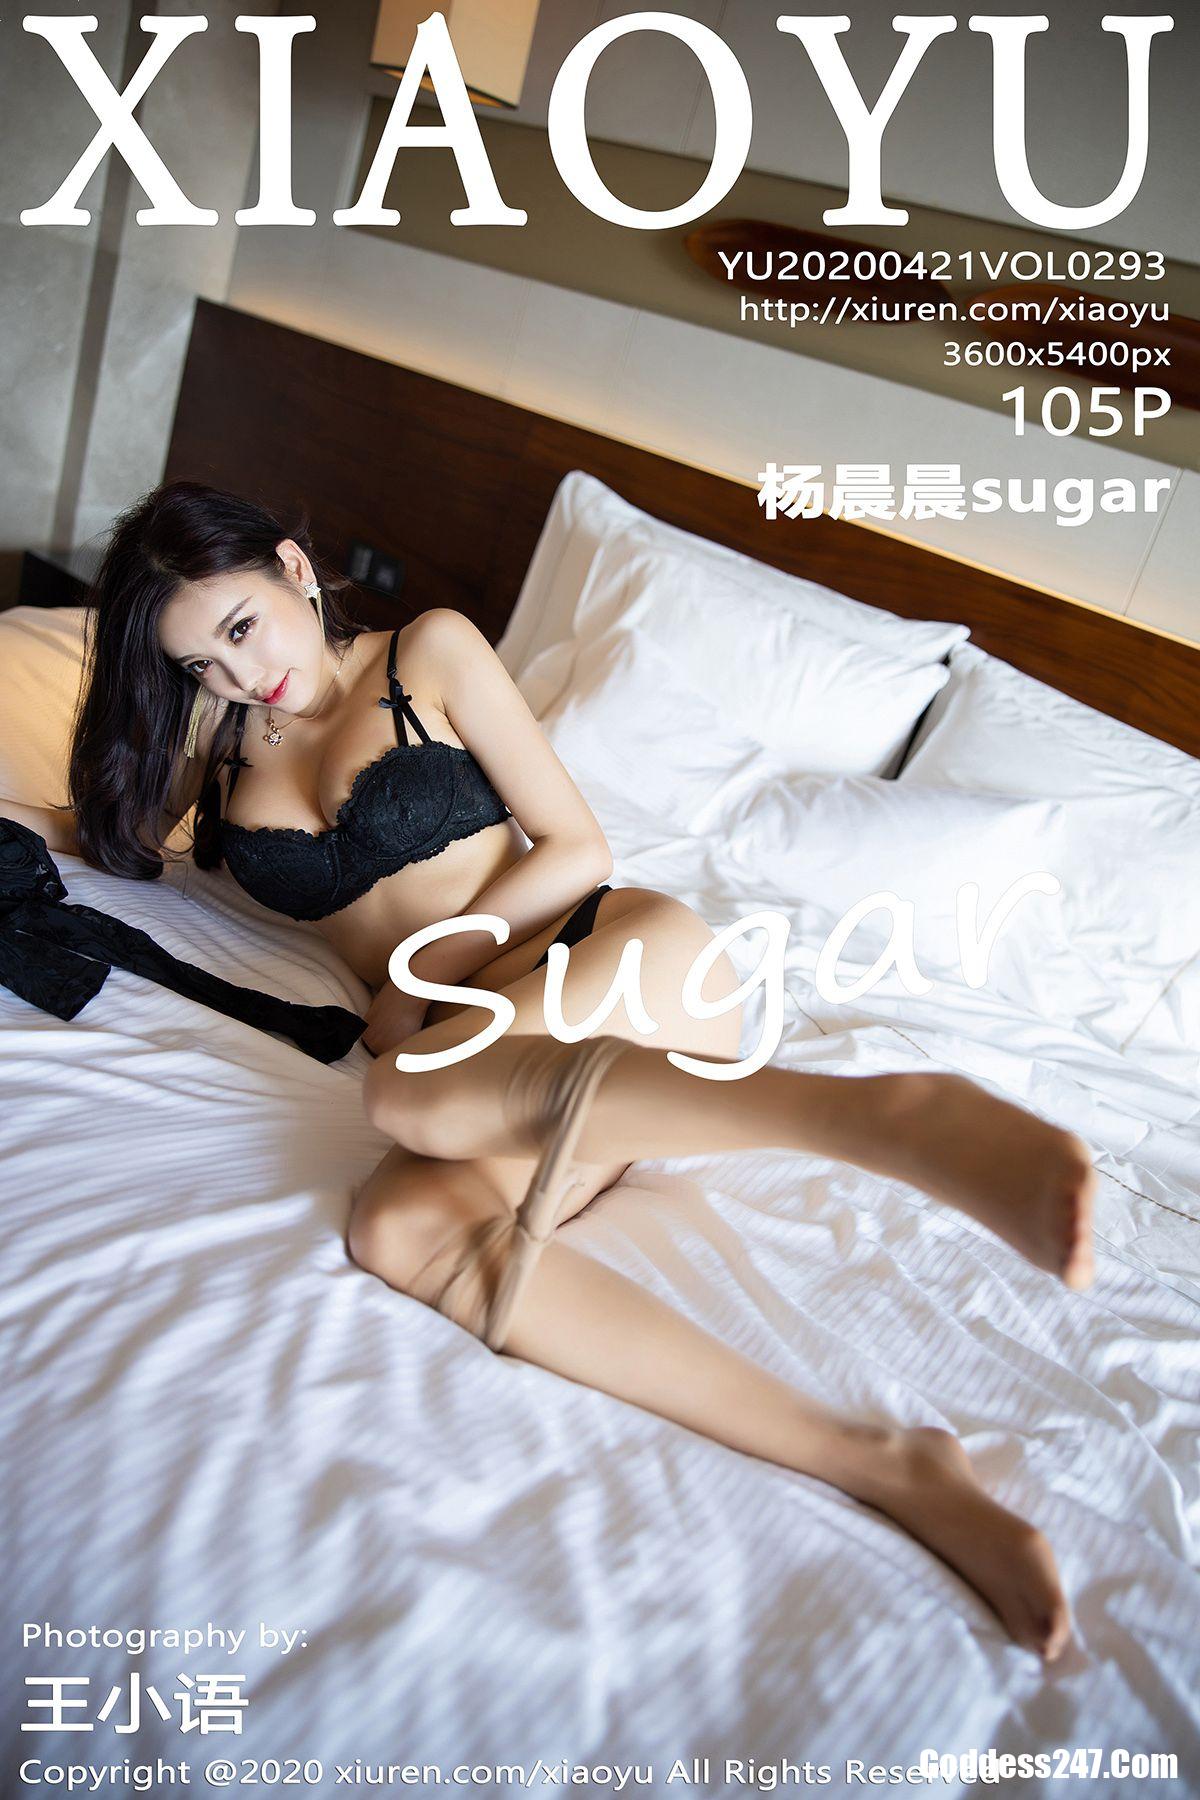 XiaoYu Vol.293 杨晨晨sugar